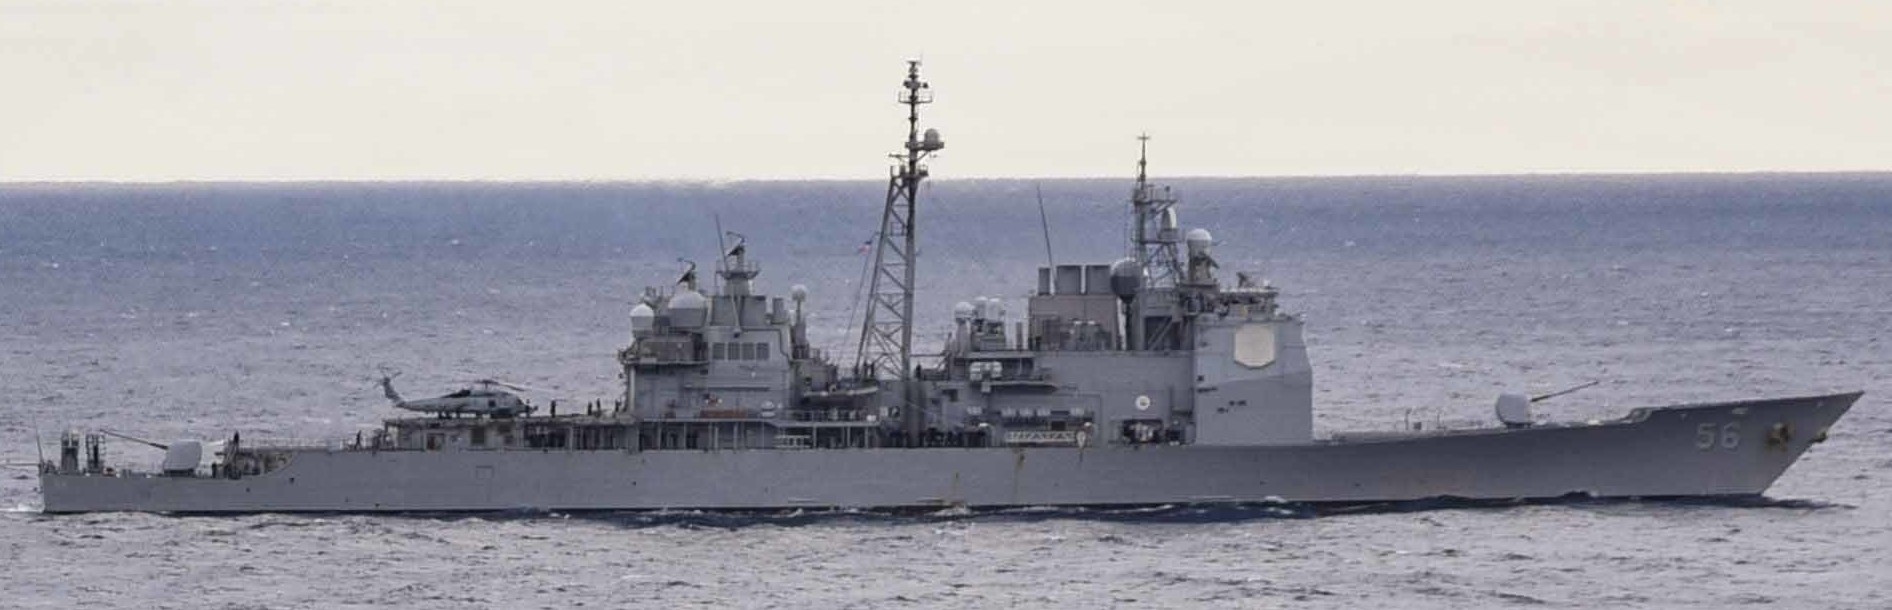 cg-56 uss san jacinto ticonderoga class guided missile cruiser aegis us navy 89